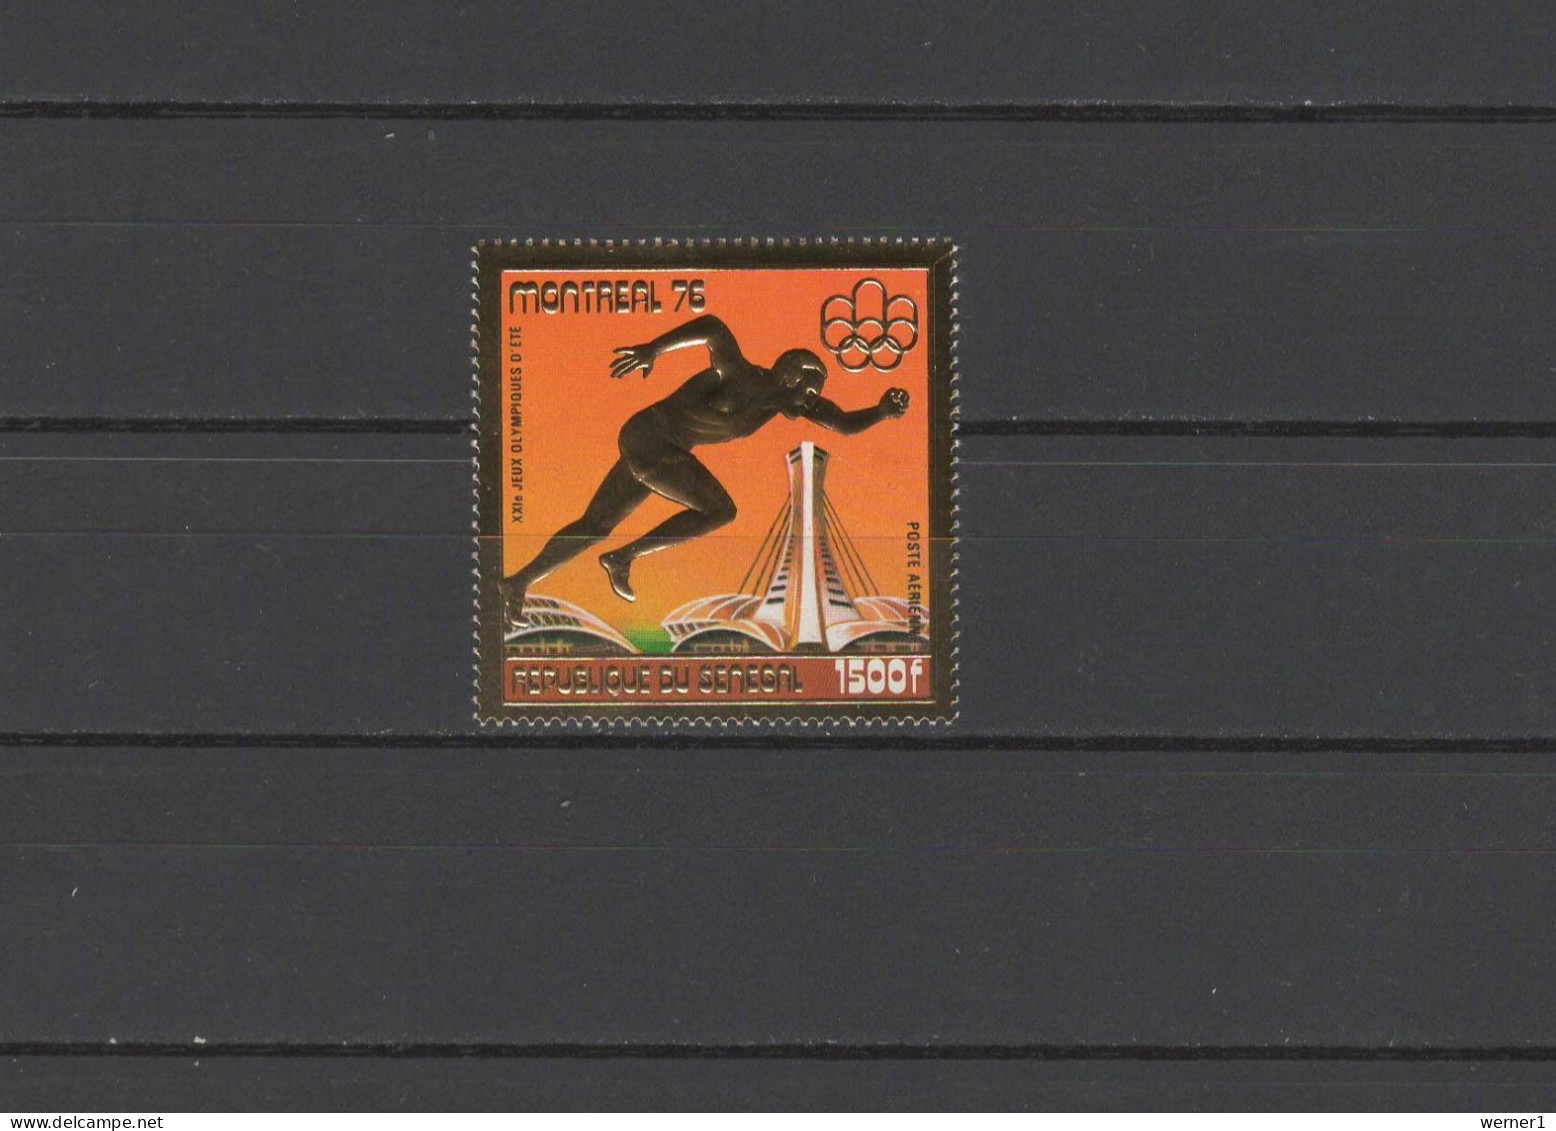 Senegal 1976 Olympic Games Montreal, Athletics Gold Stamp MNH - Ete 1976: Montréal